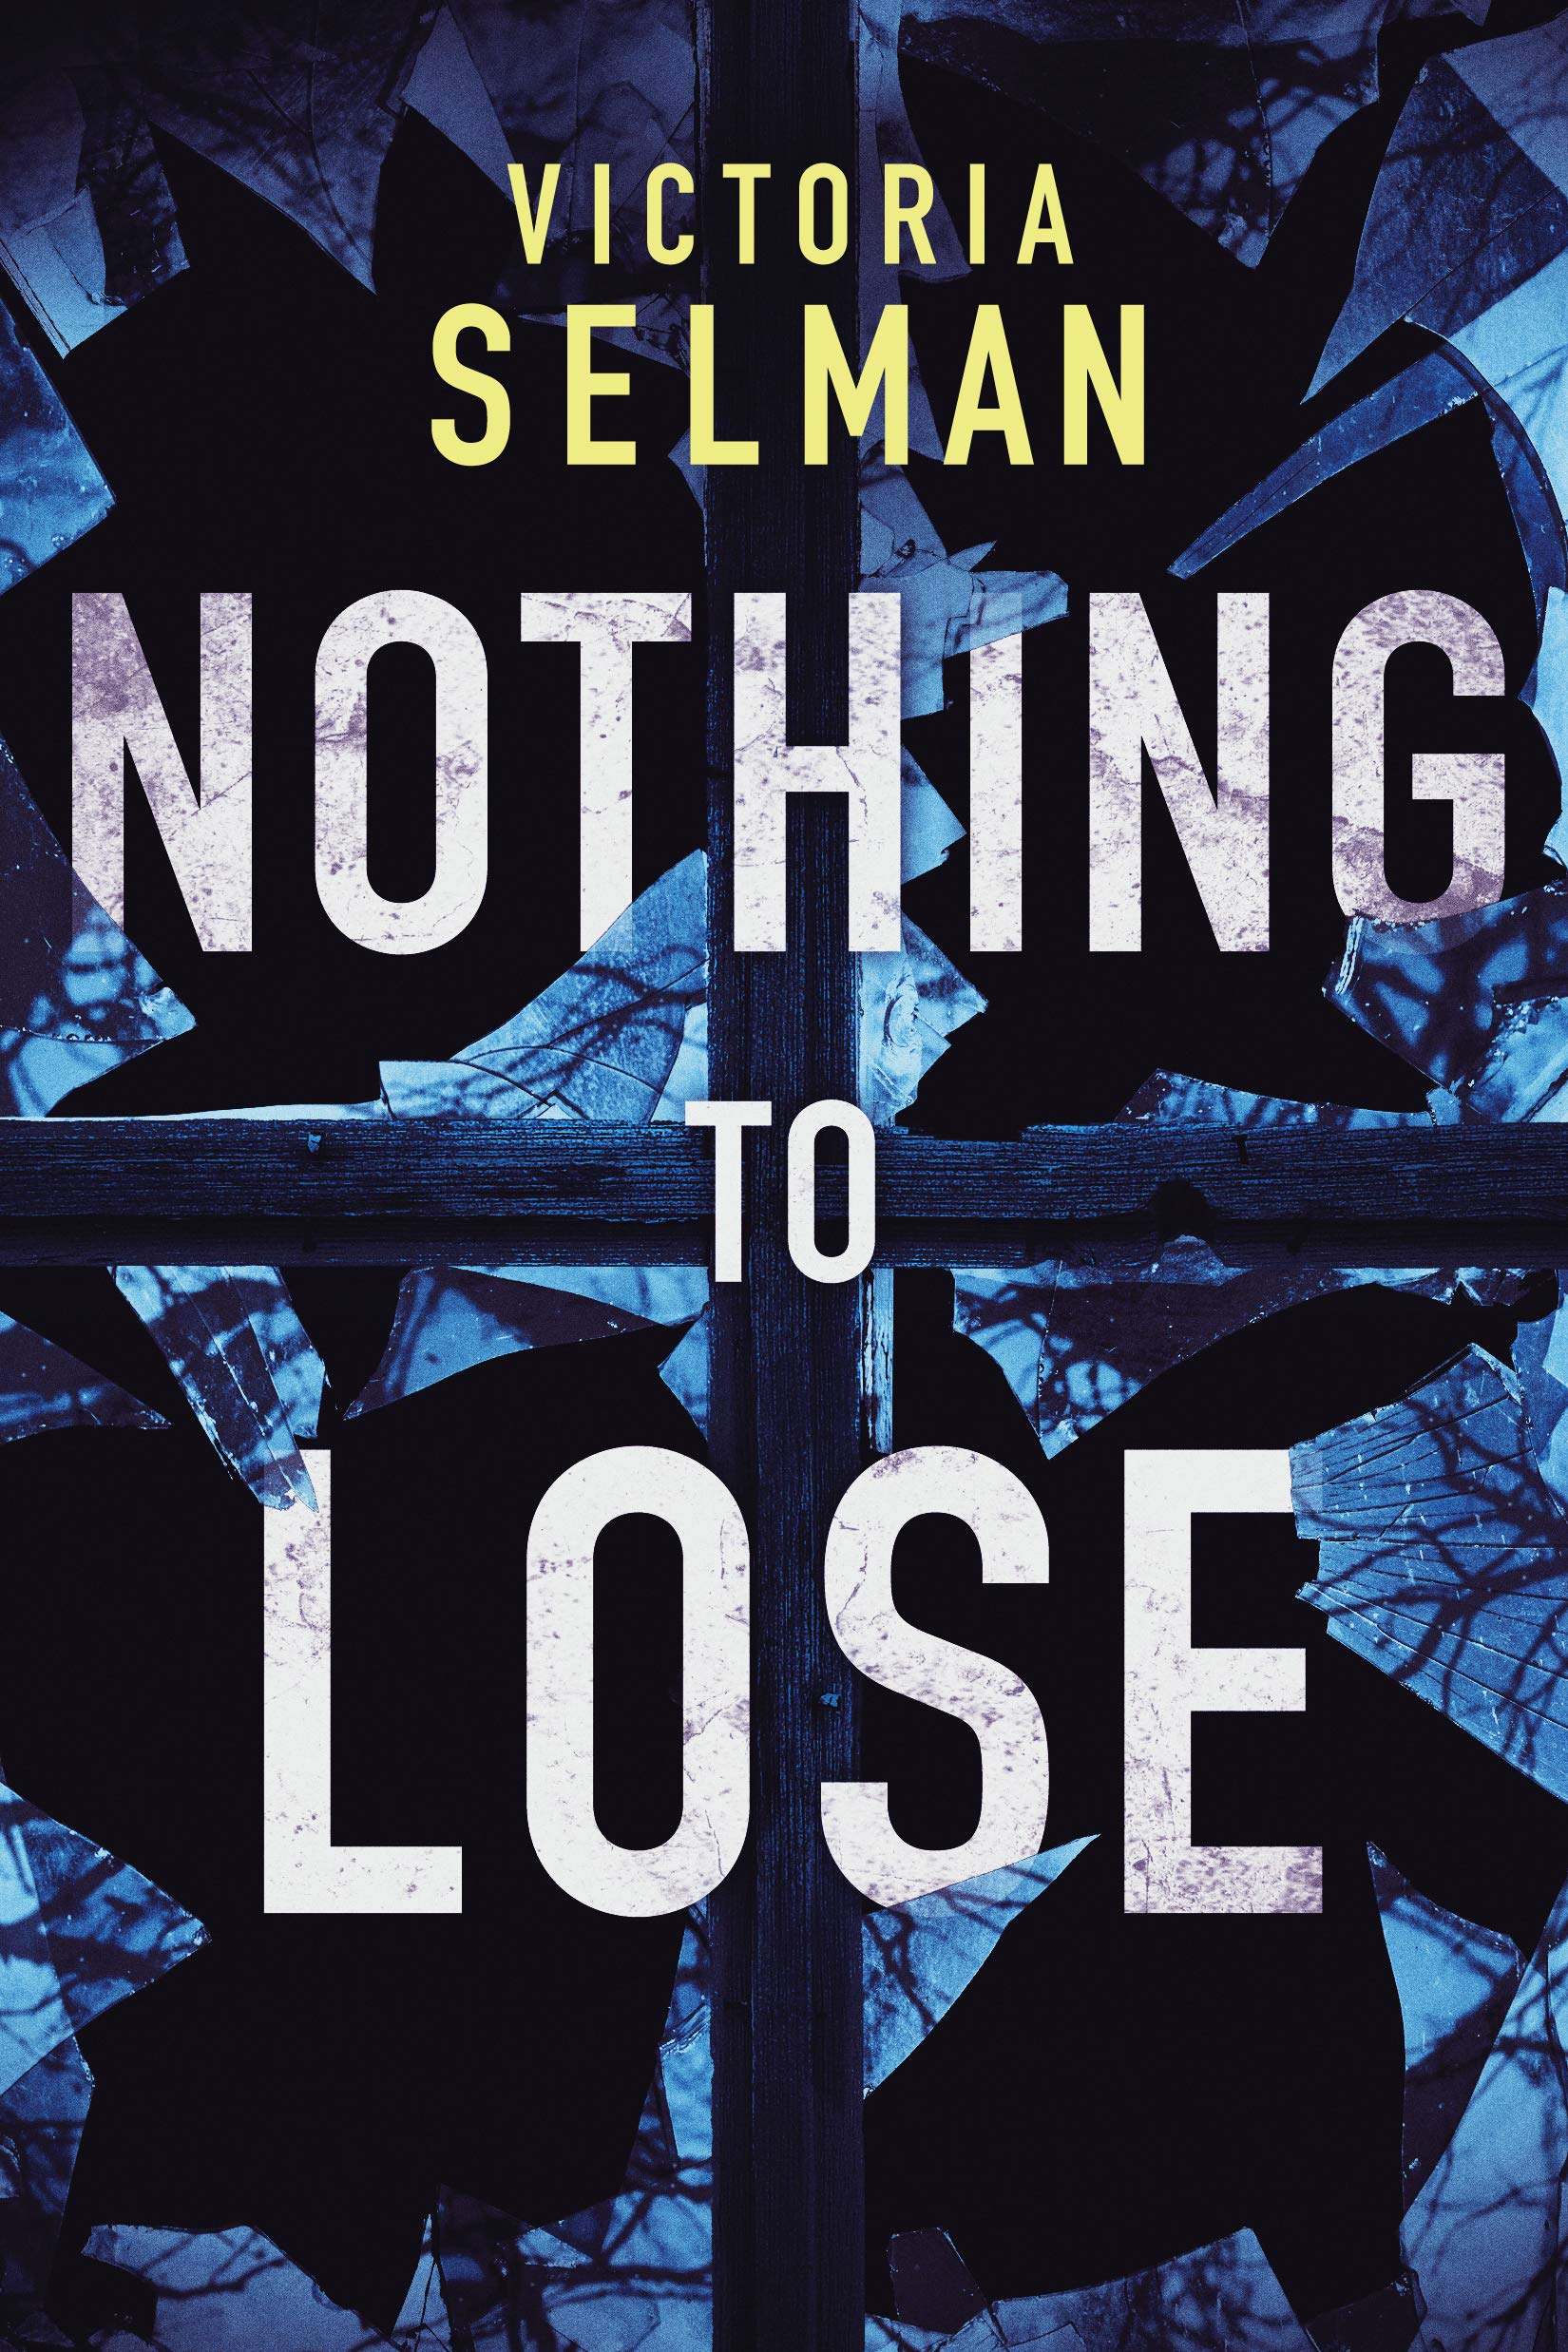 Nothing to Lose (Ziba MacKenzie Book 2)